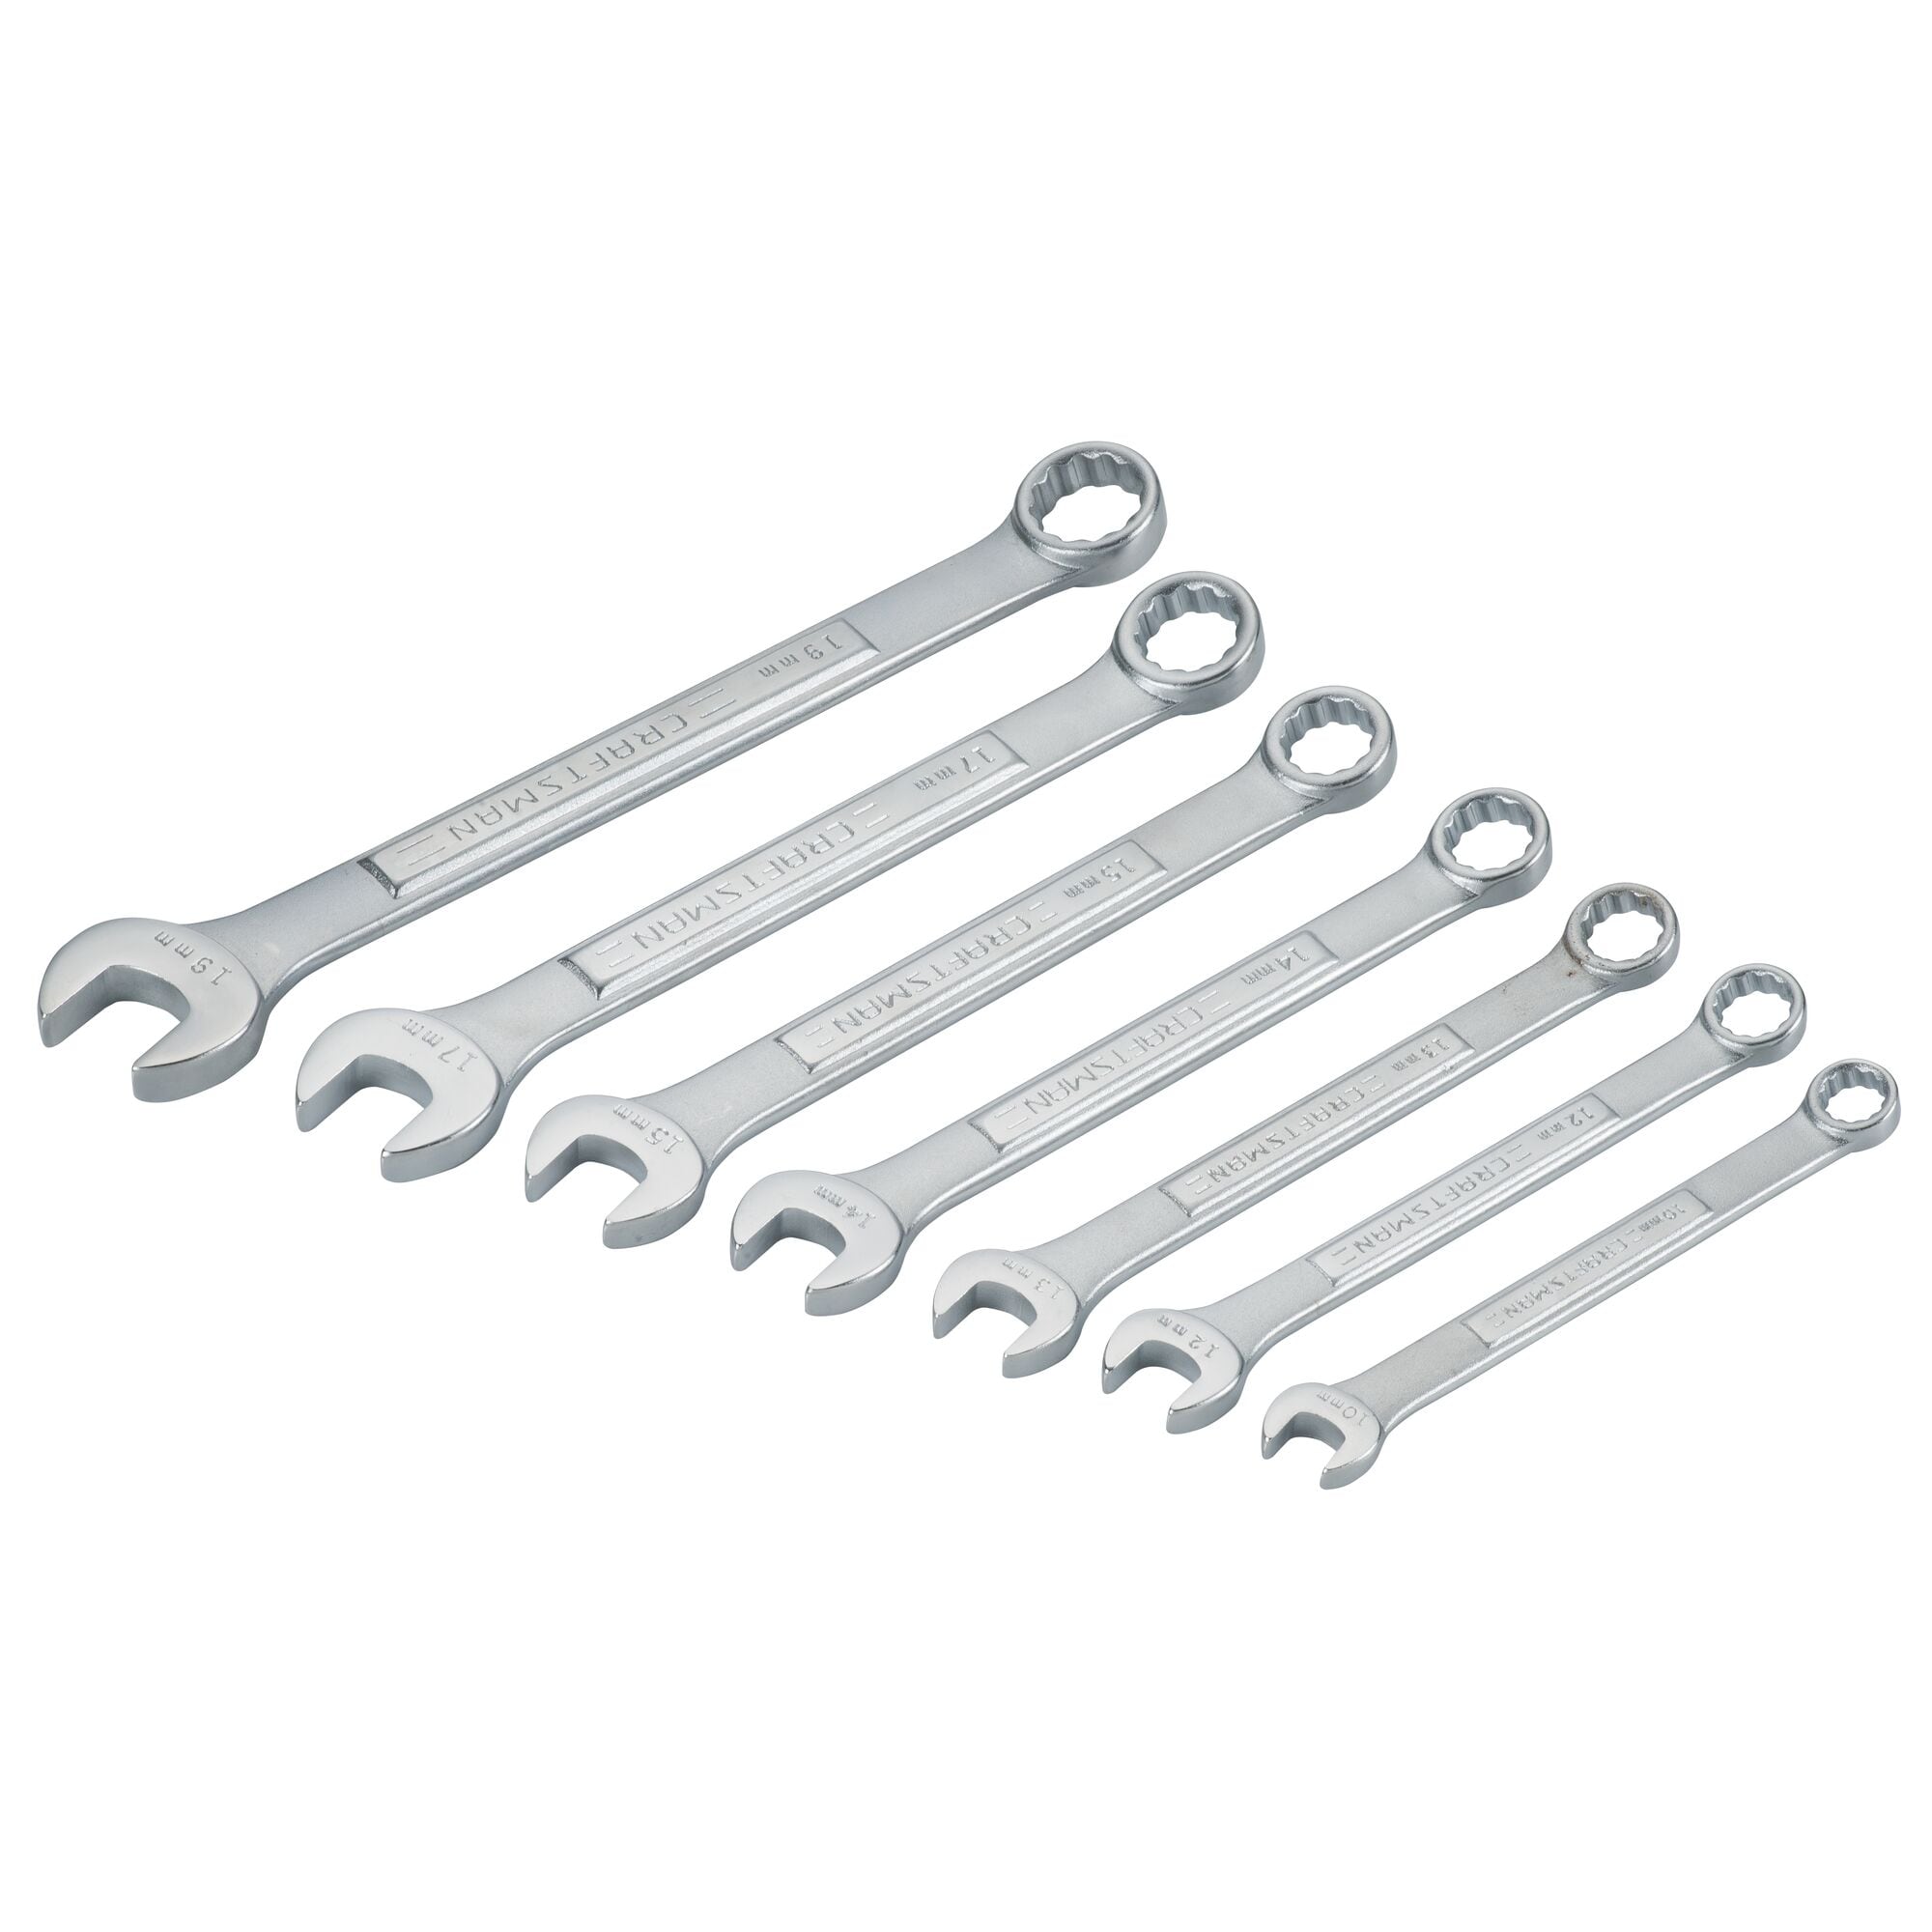 Combination Wrench Set– Shopataos